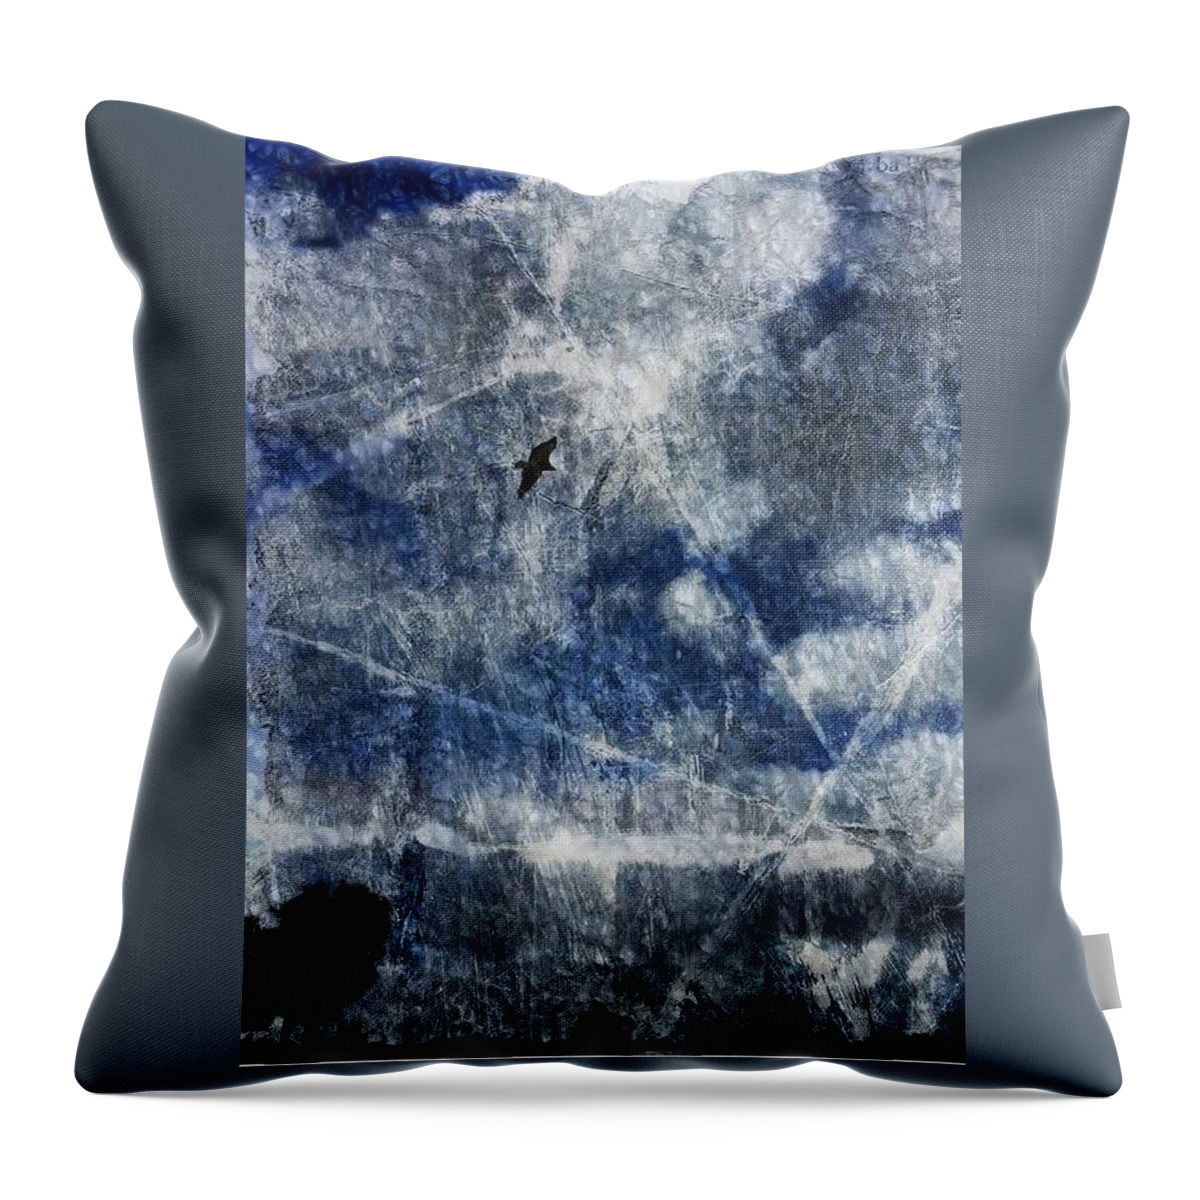 Sky Throw Pillow featuring the digital art Night Flight by Lessandra Grimley